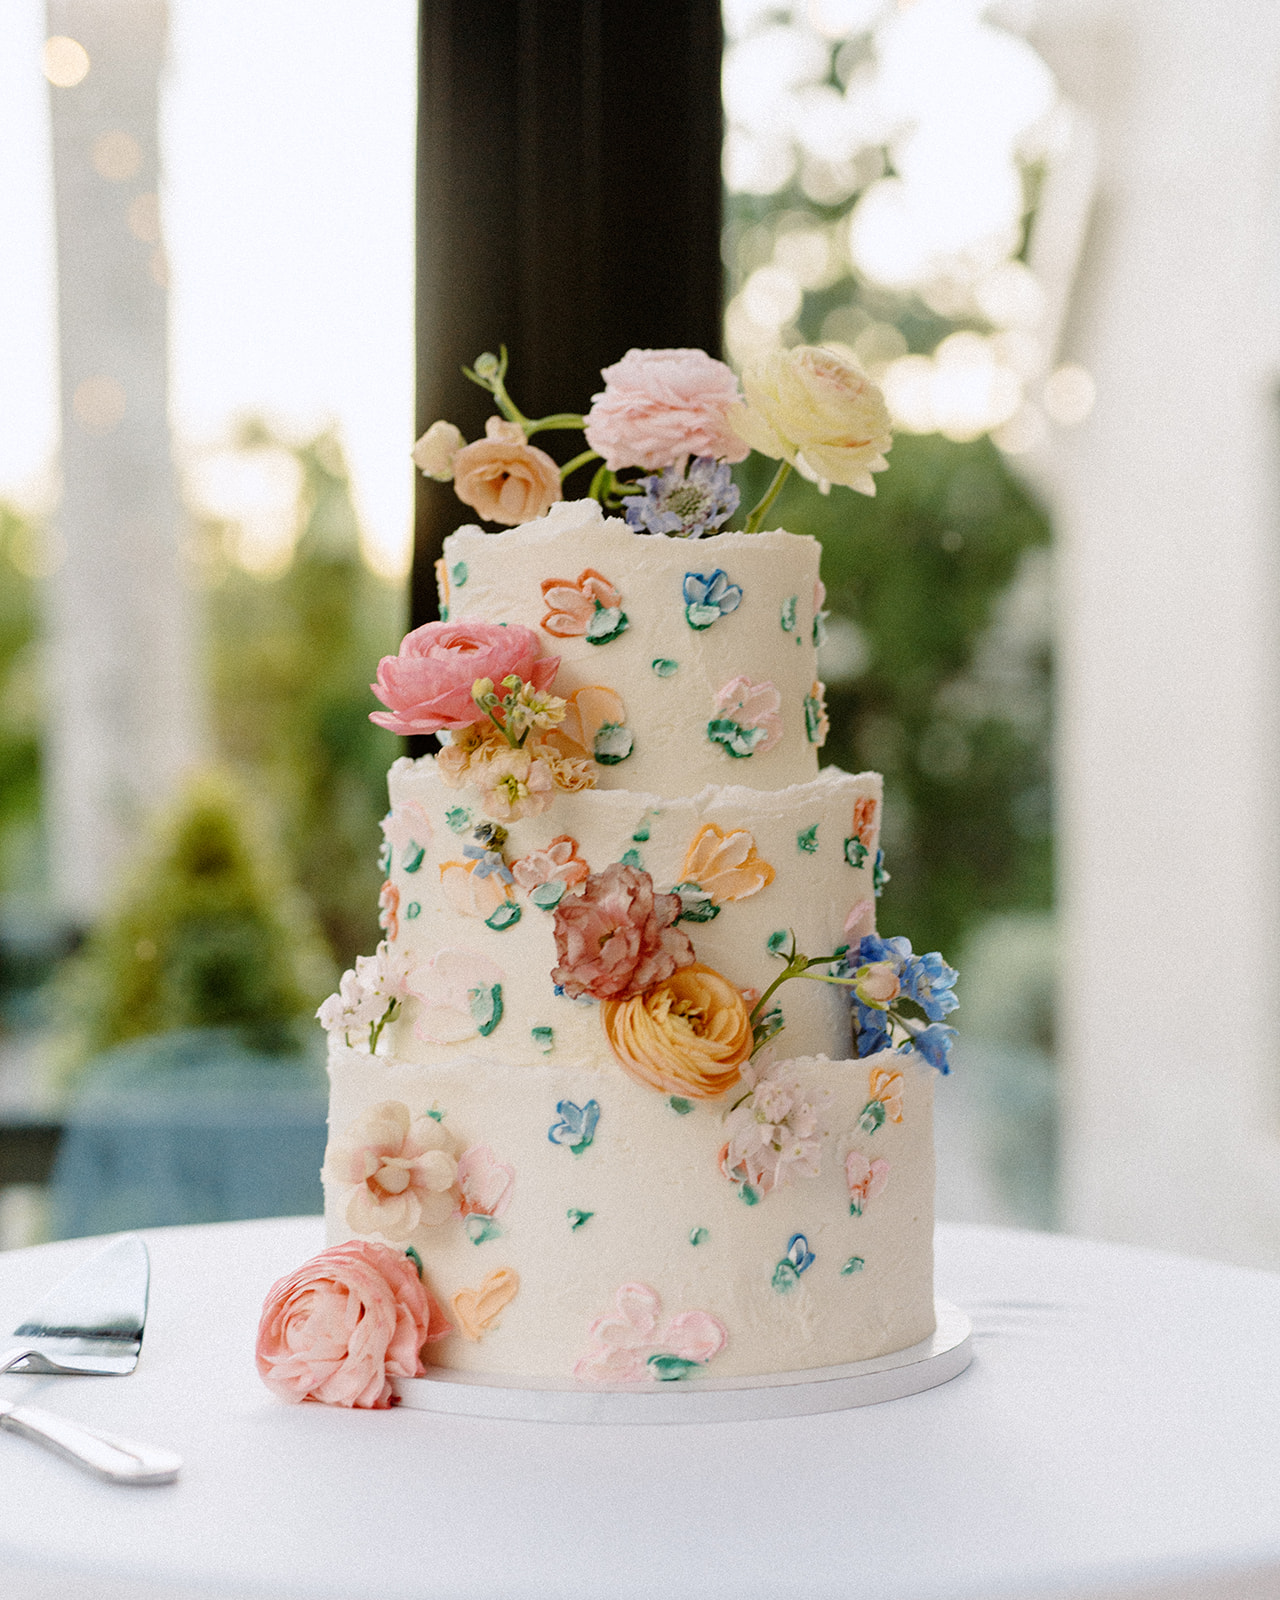 Wedding Cake by LadyCakes Bakery in SWFL